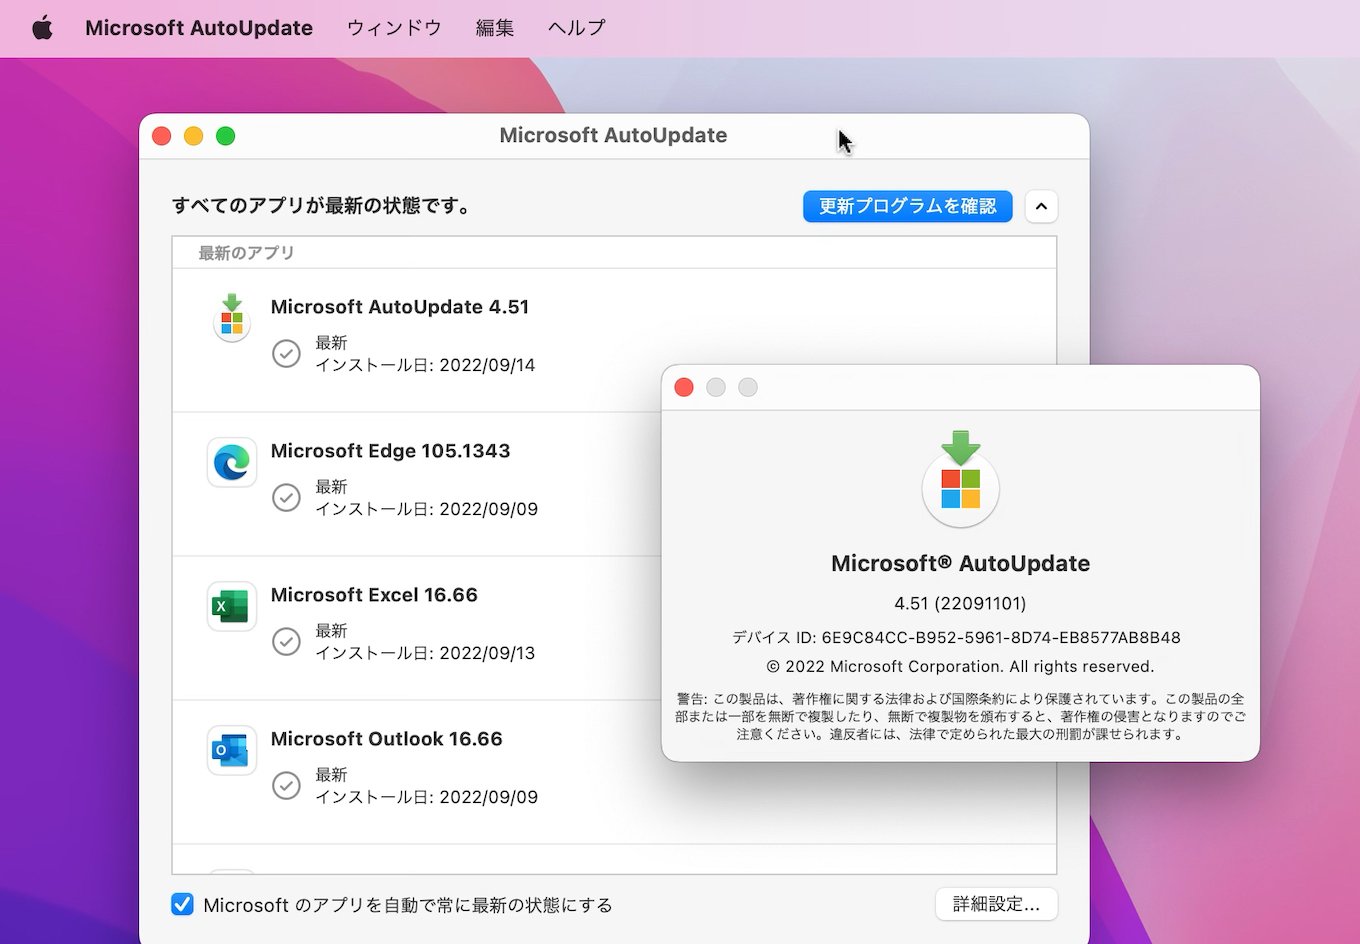 Microsoft AutoUpdate on macOS 12 Monterey